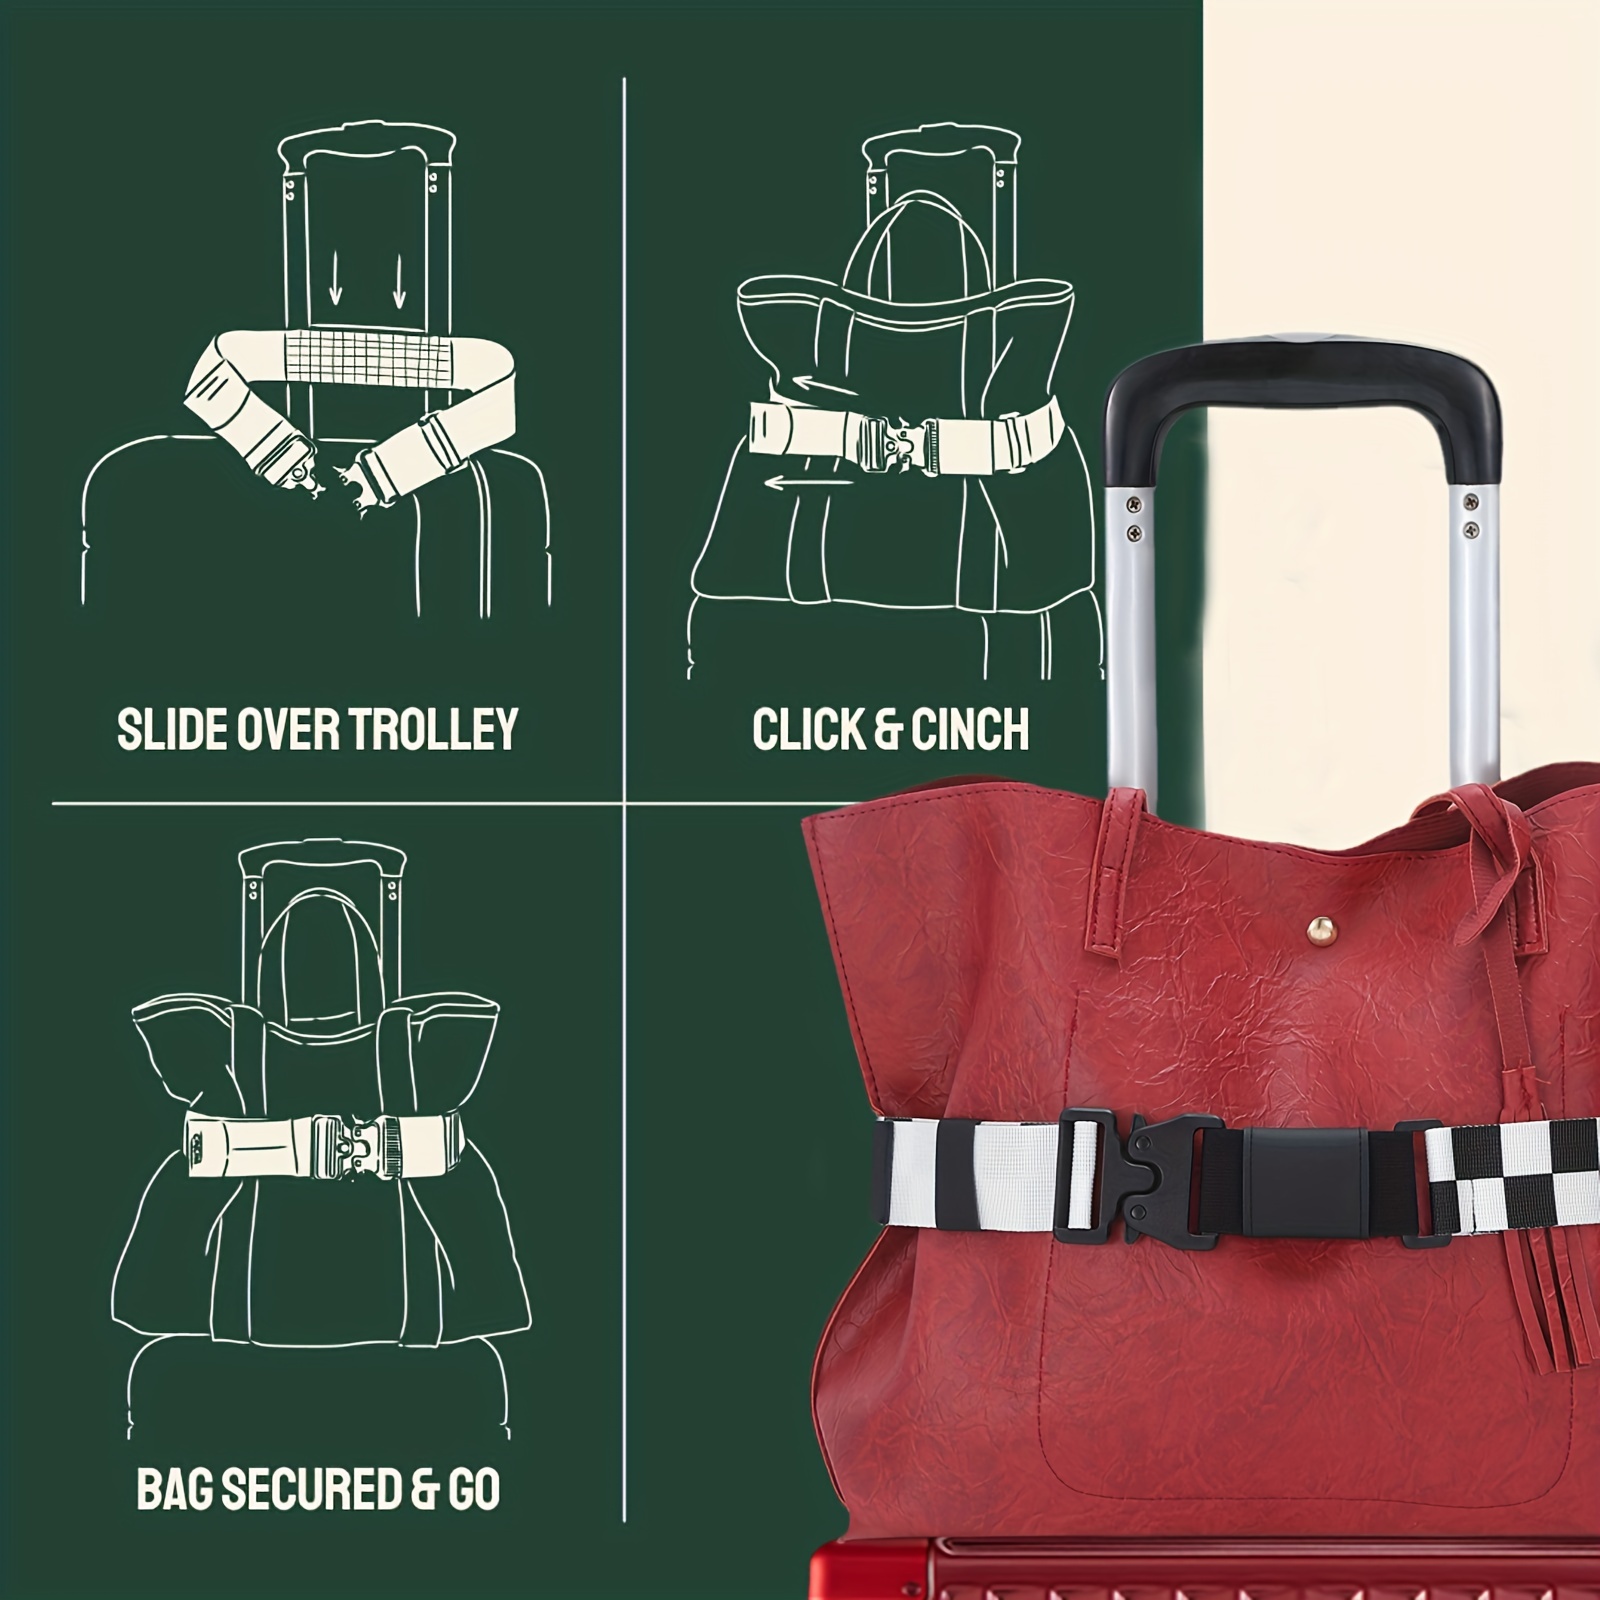 Travel Belt for Luggage - Stylish & Adjustable Add A Bag Luggage